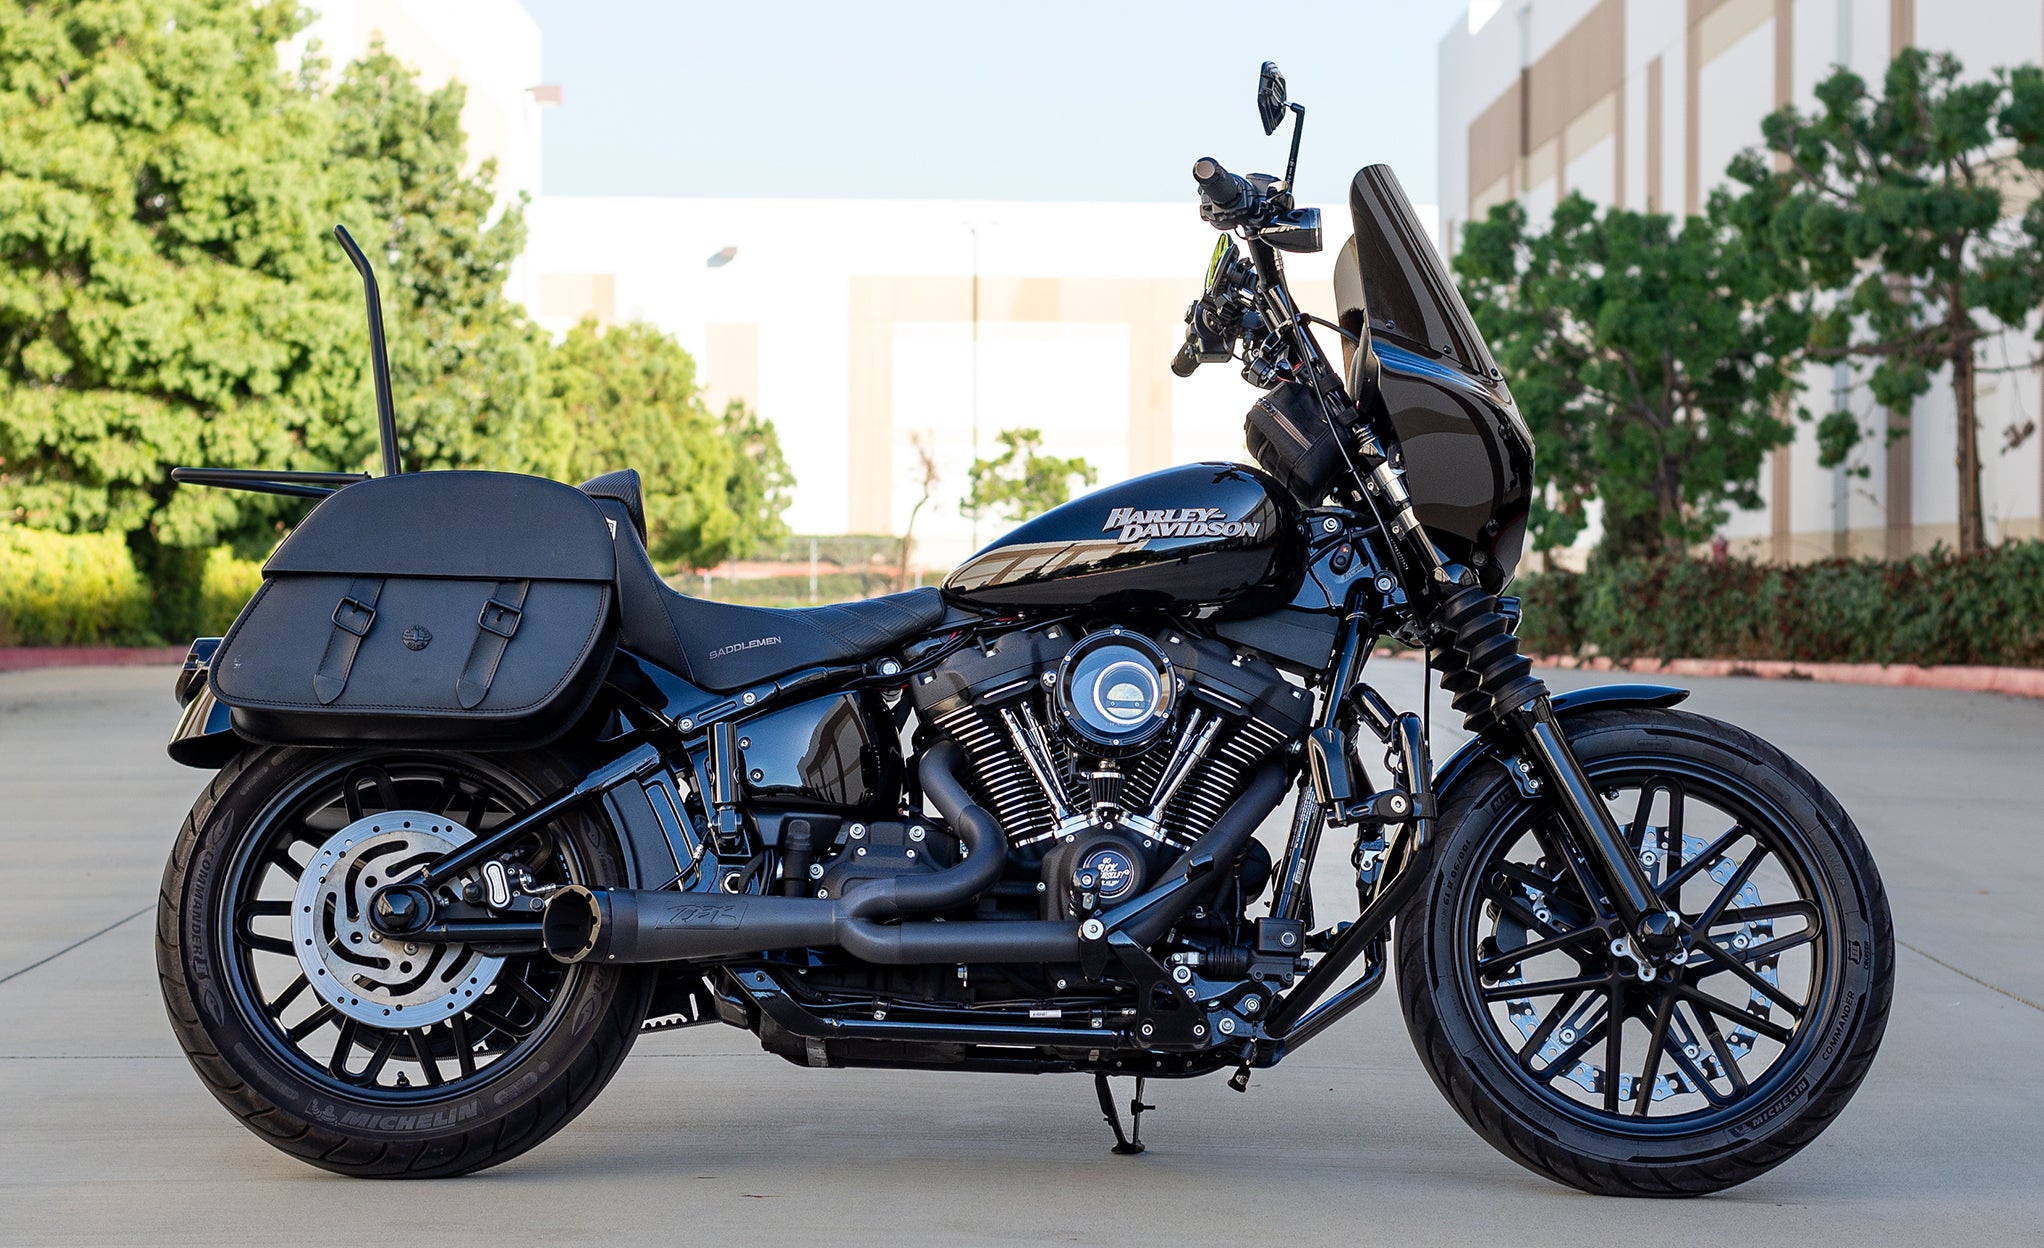 Viking Baelor Medium Leather Motorcycle Saddlebags For Harley Davidson Softail Street Bob Fxbb @expand